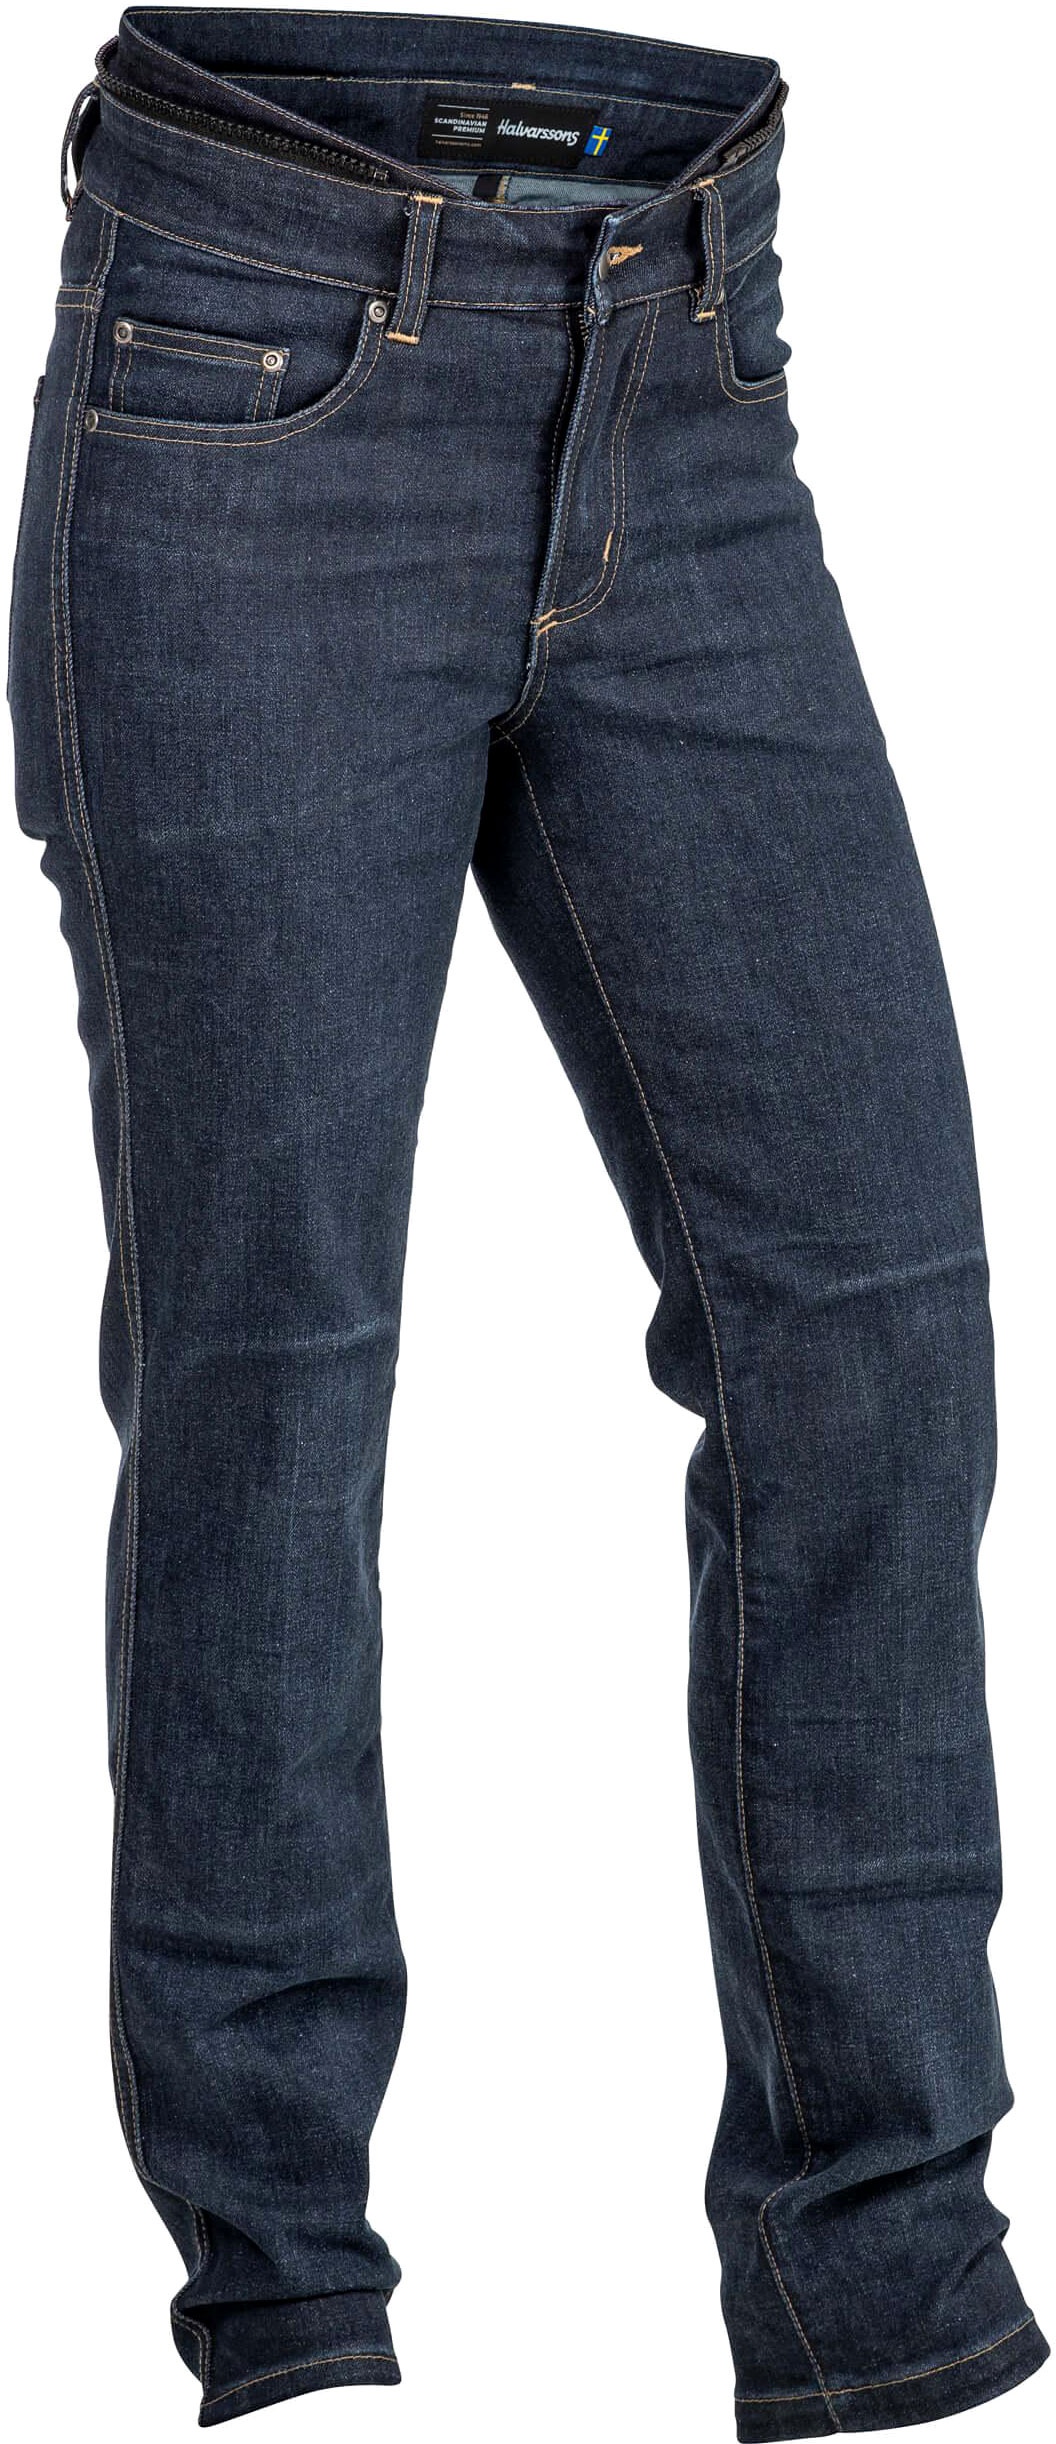 Halvarssons Rogen, jeans femmes - Bleu - 44